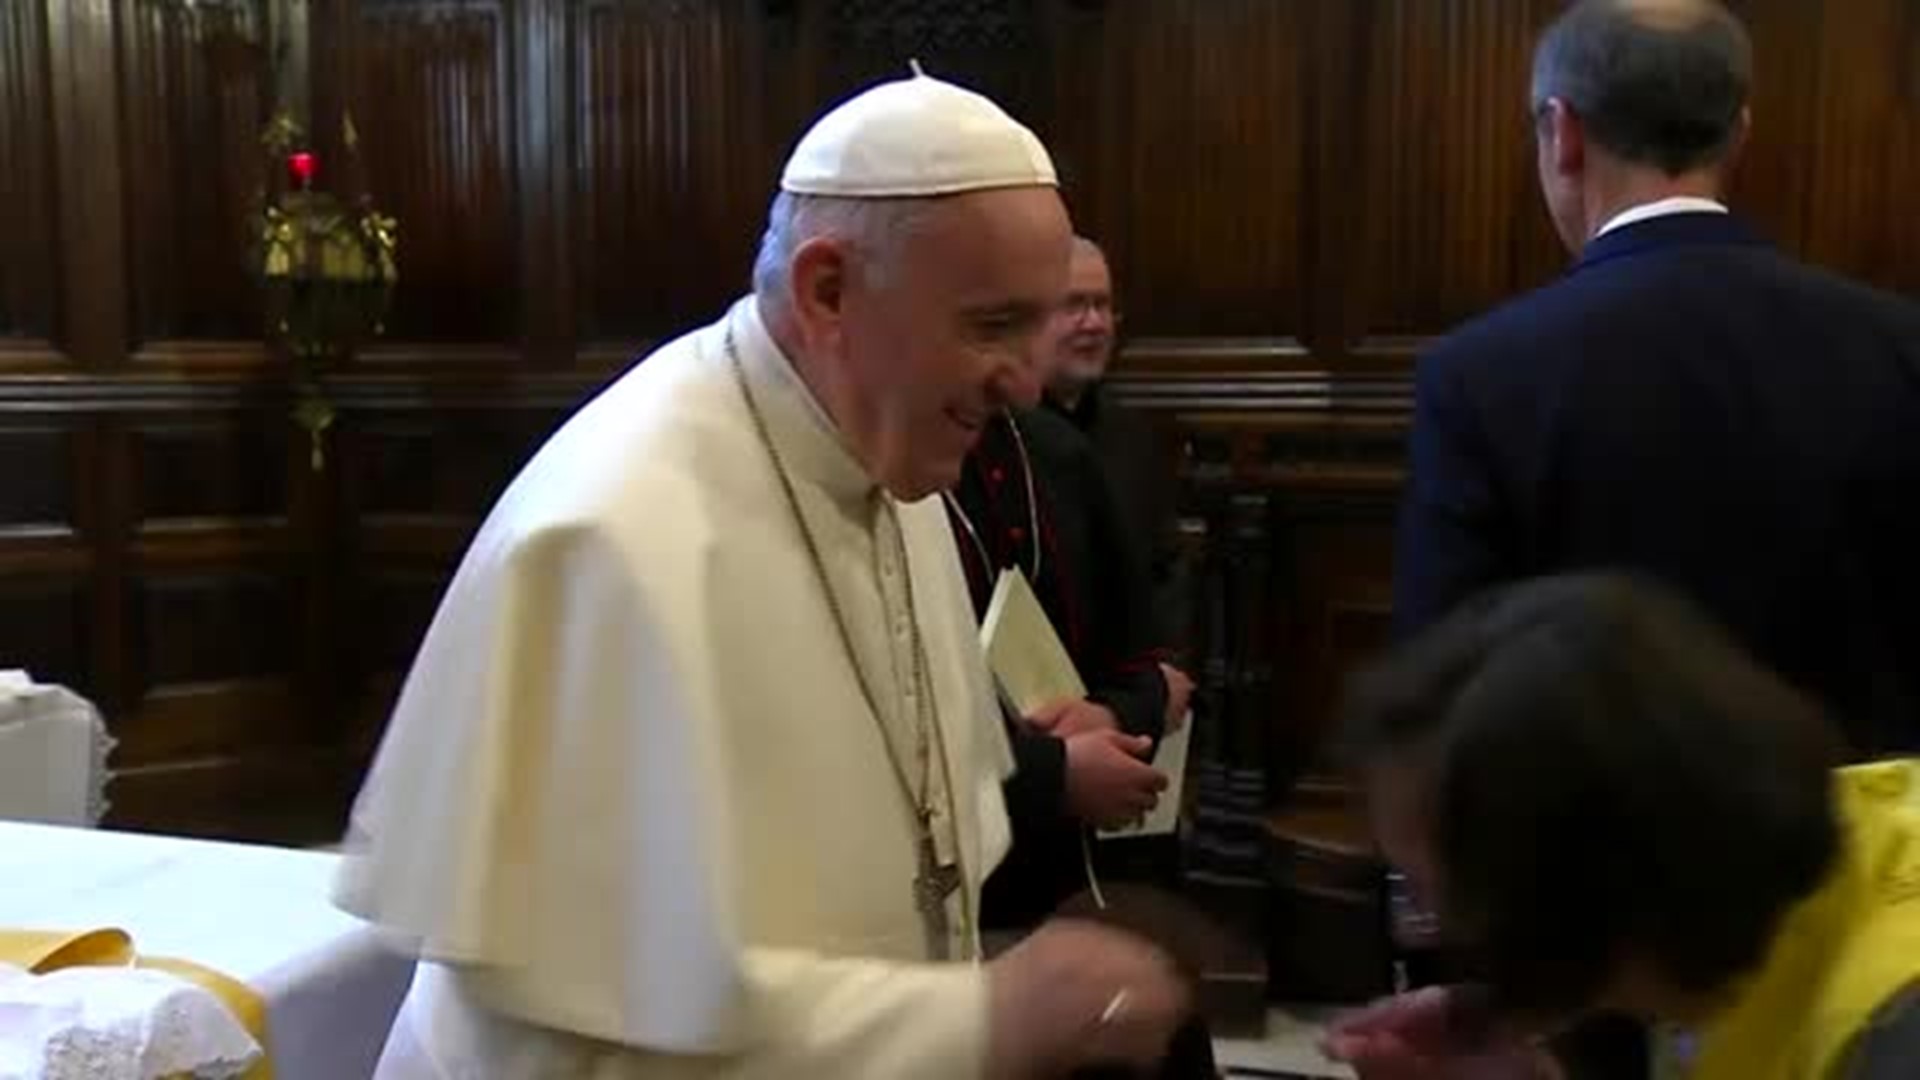 Hejse Er Et bestemt Pope allows ring-kissing after pulling hand away at event | fox61.com